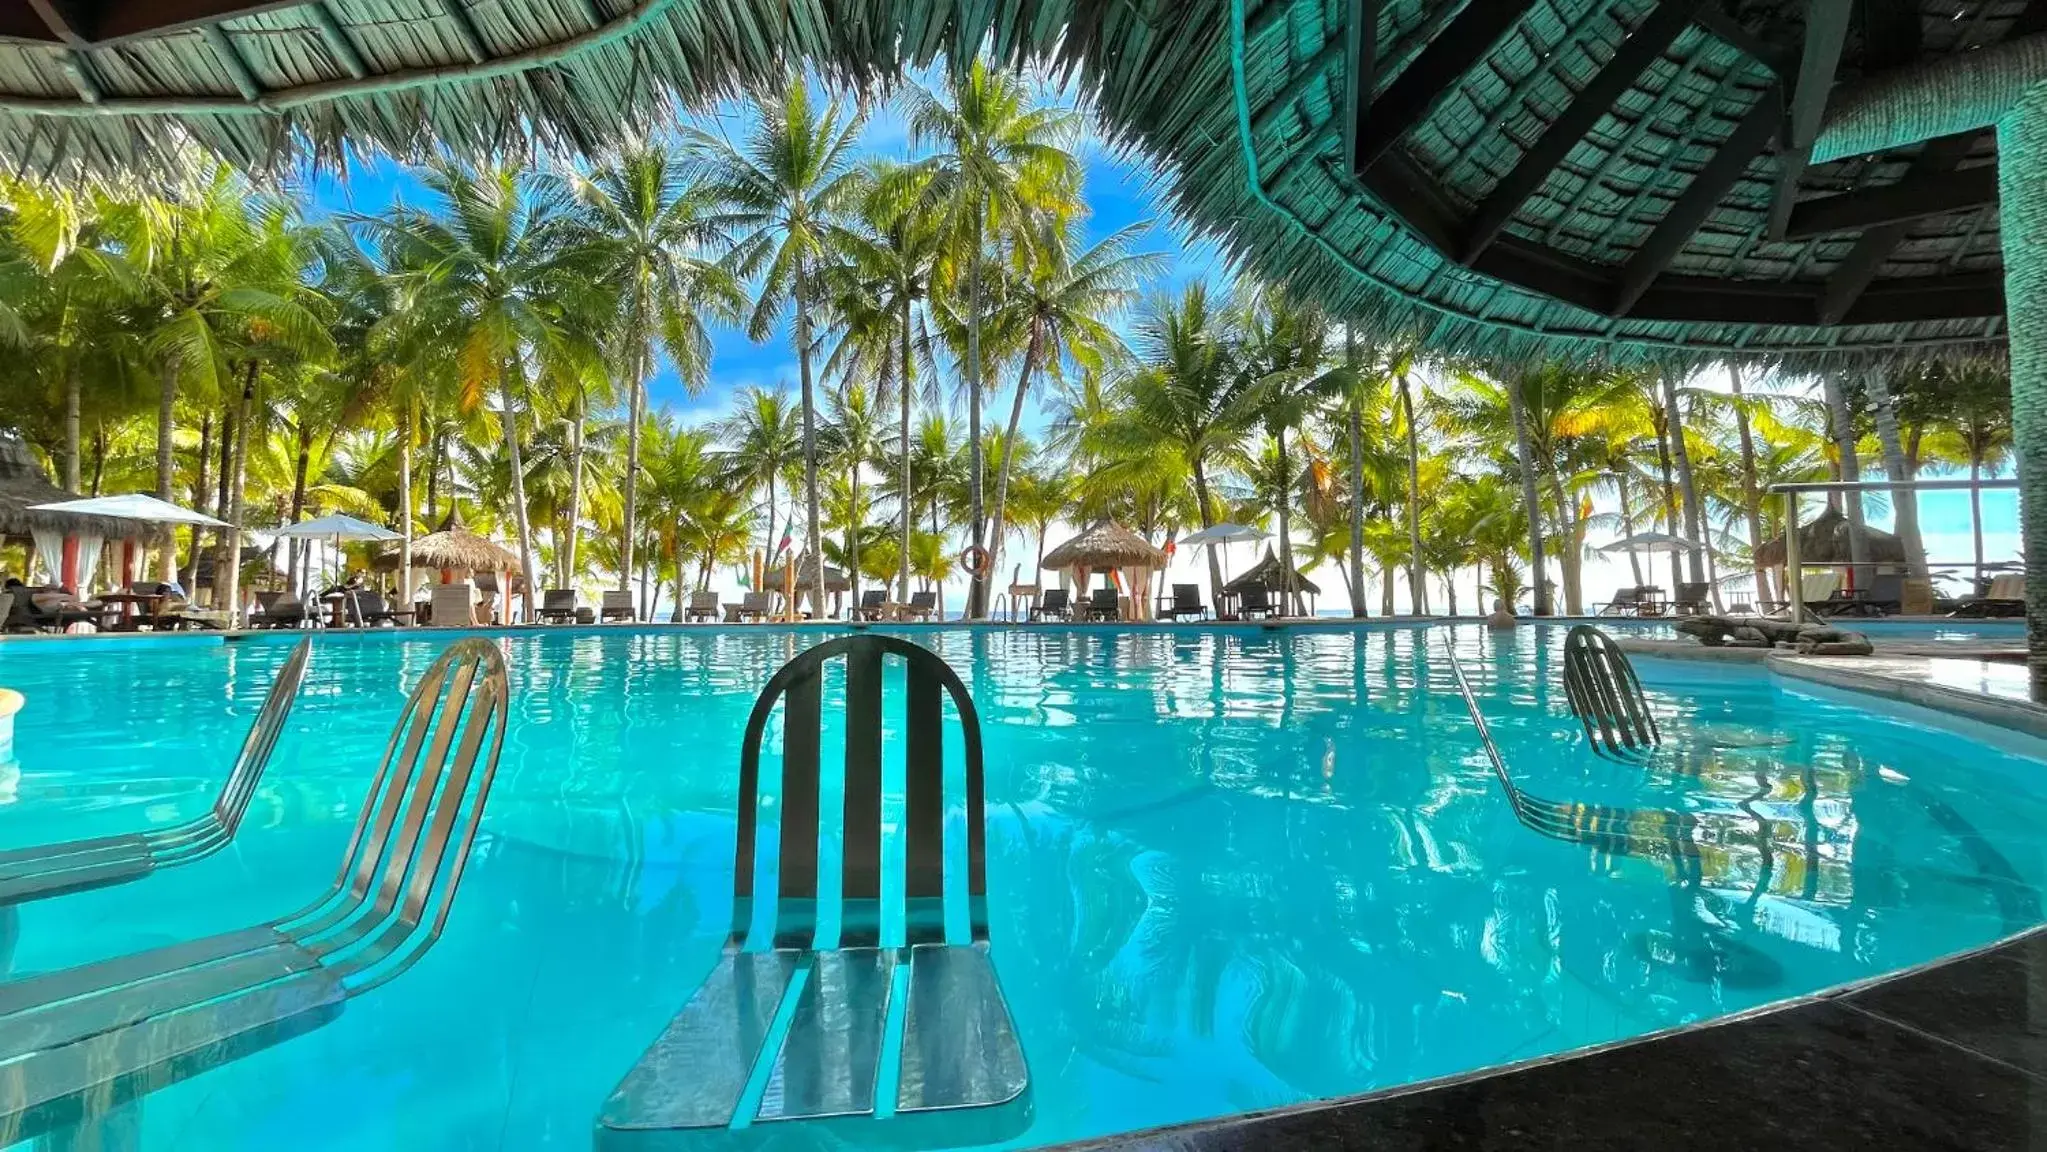 Swimming Pool in Coco Grove Beach Resort, Siquijor Island